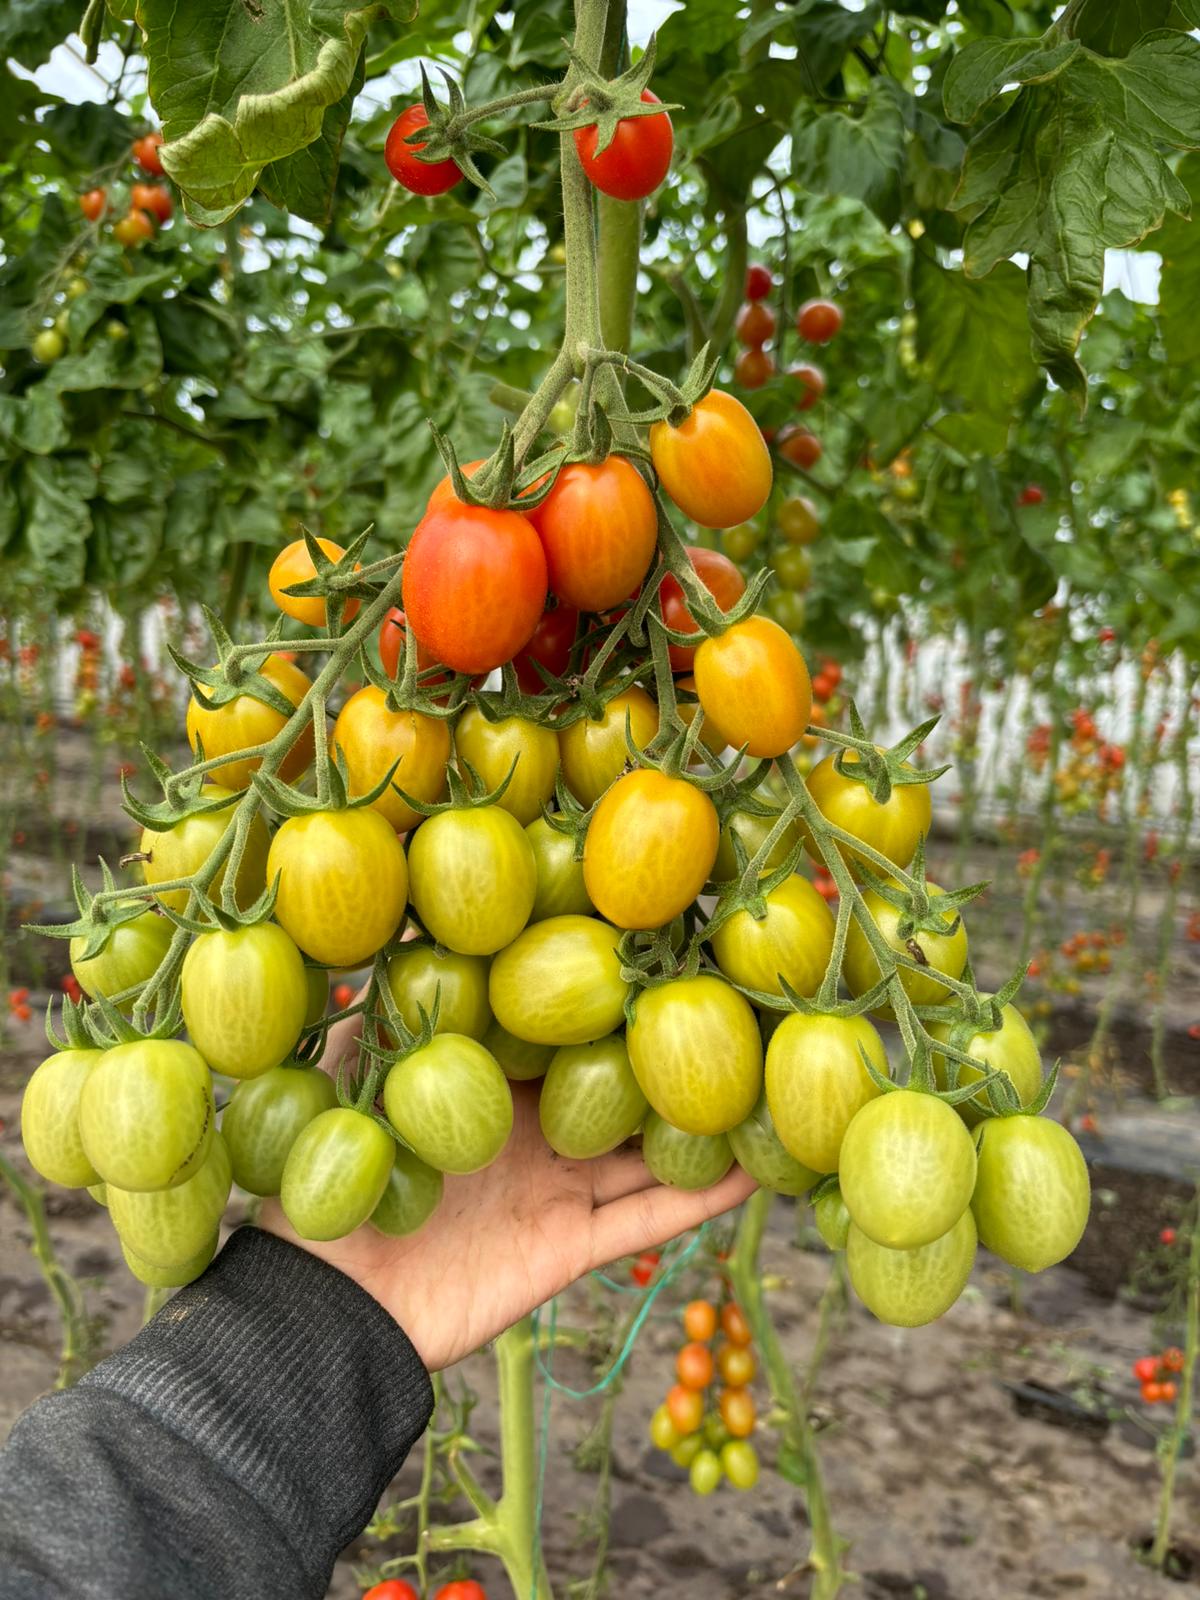 tomatoes 100 agroplasma 2